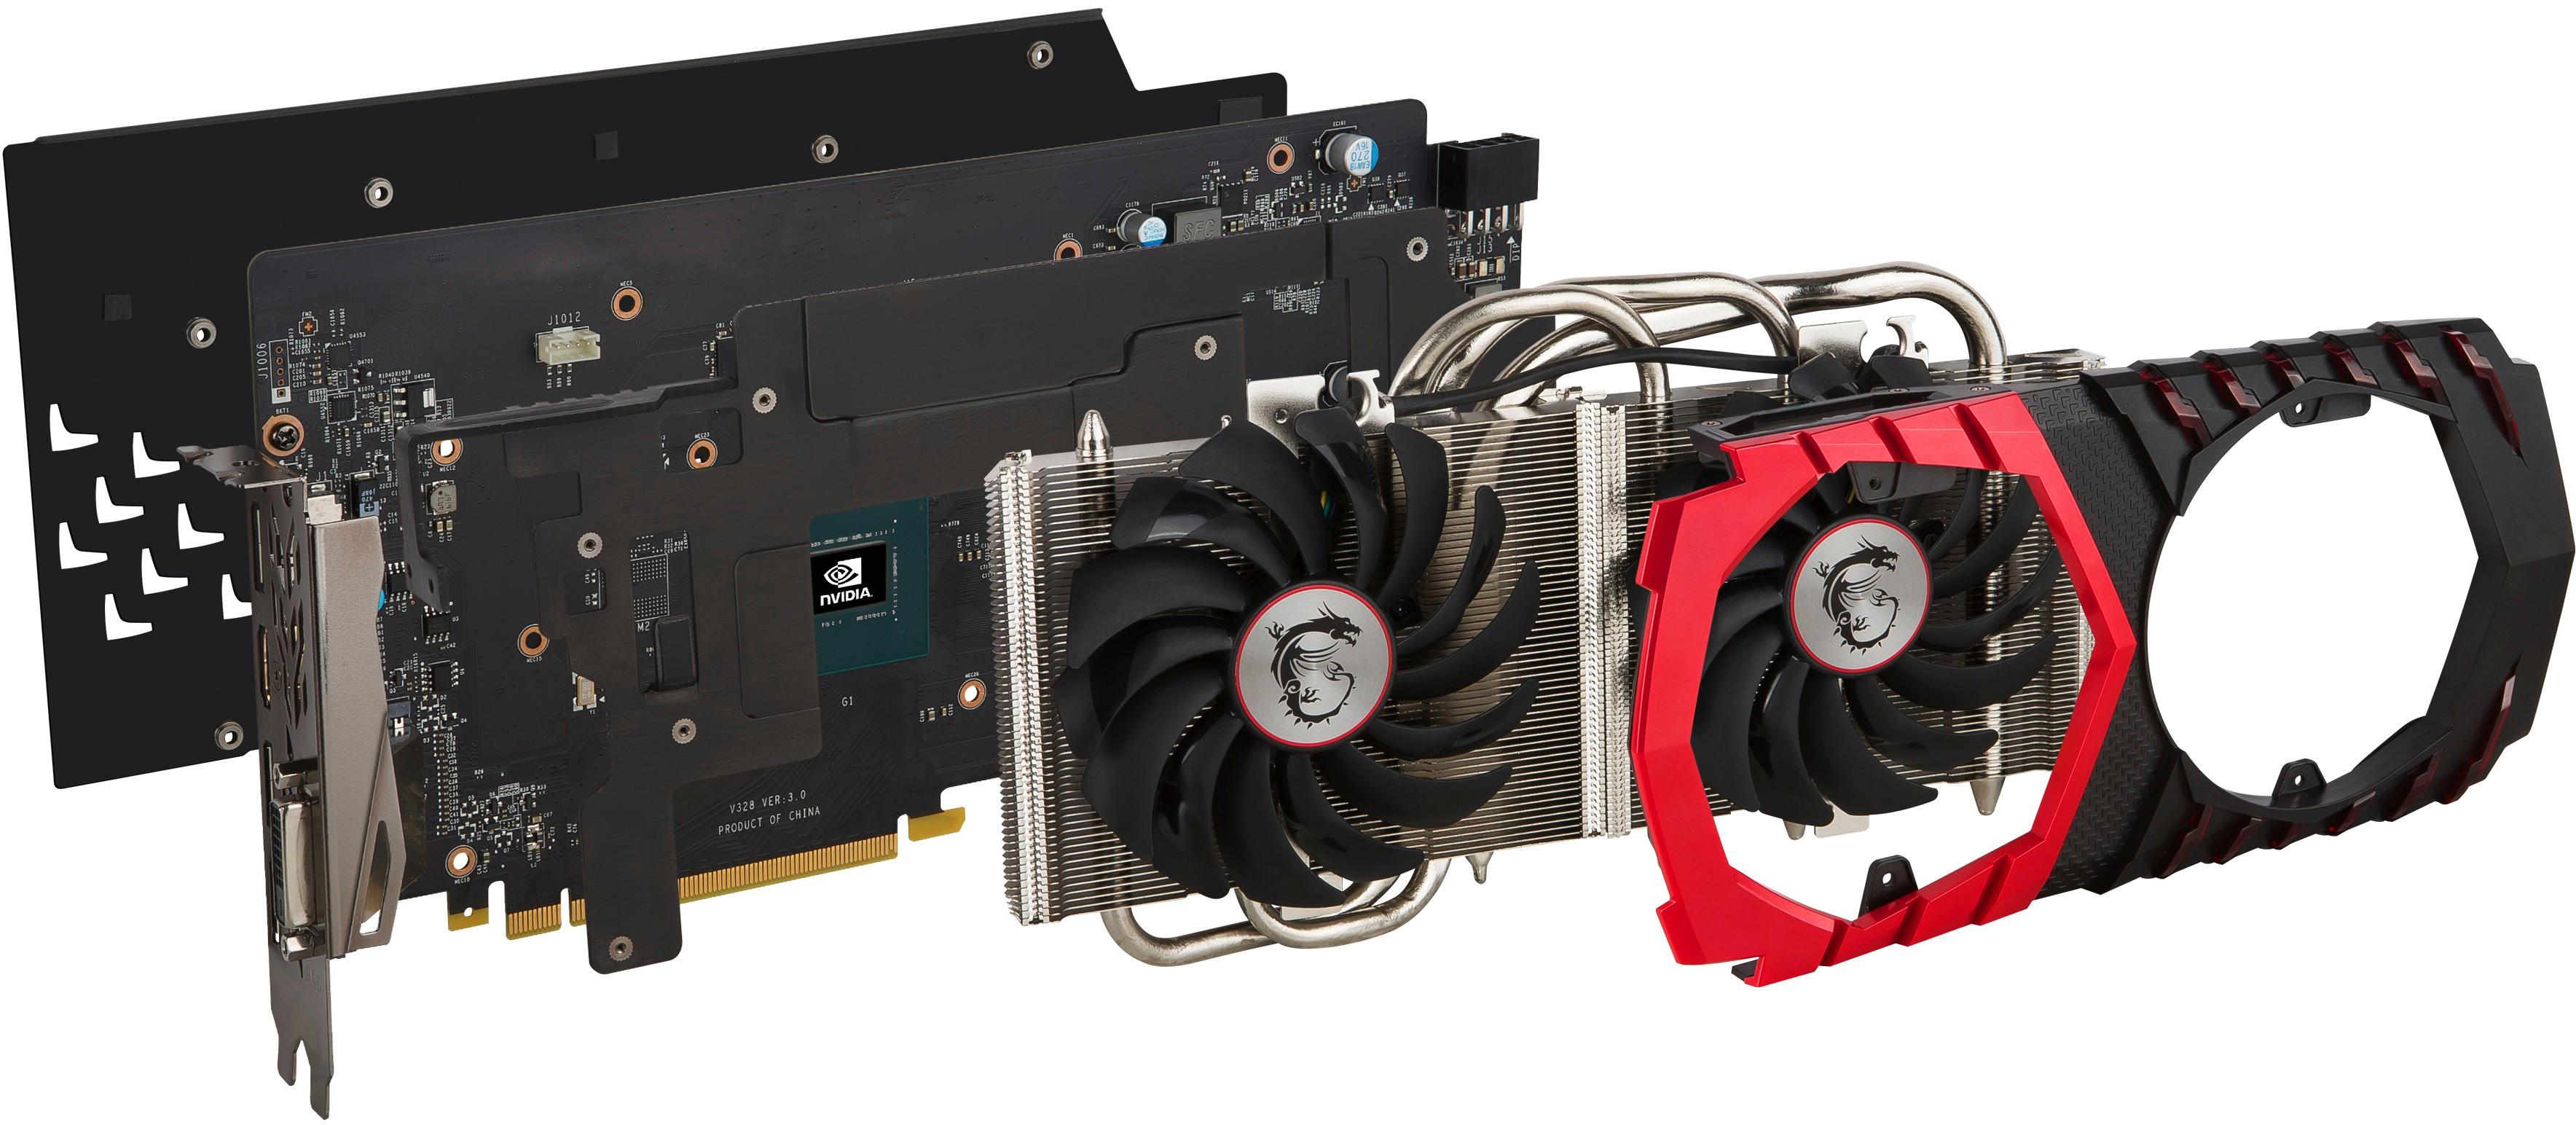 Msi Nvidia Geforce Gtx 1060 Gaming X Bv 6gb Gddr5 Pci Express 3 0 Graphics Card Black Red Geforce Gtx 1060 Gaming X Bv Best Buy